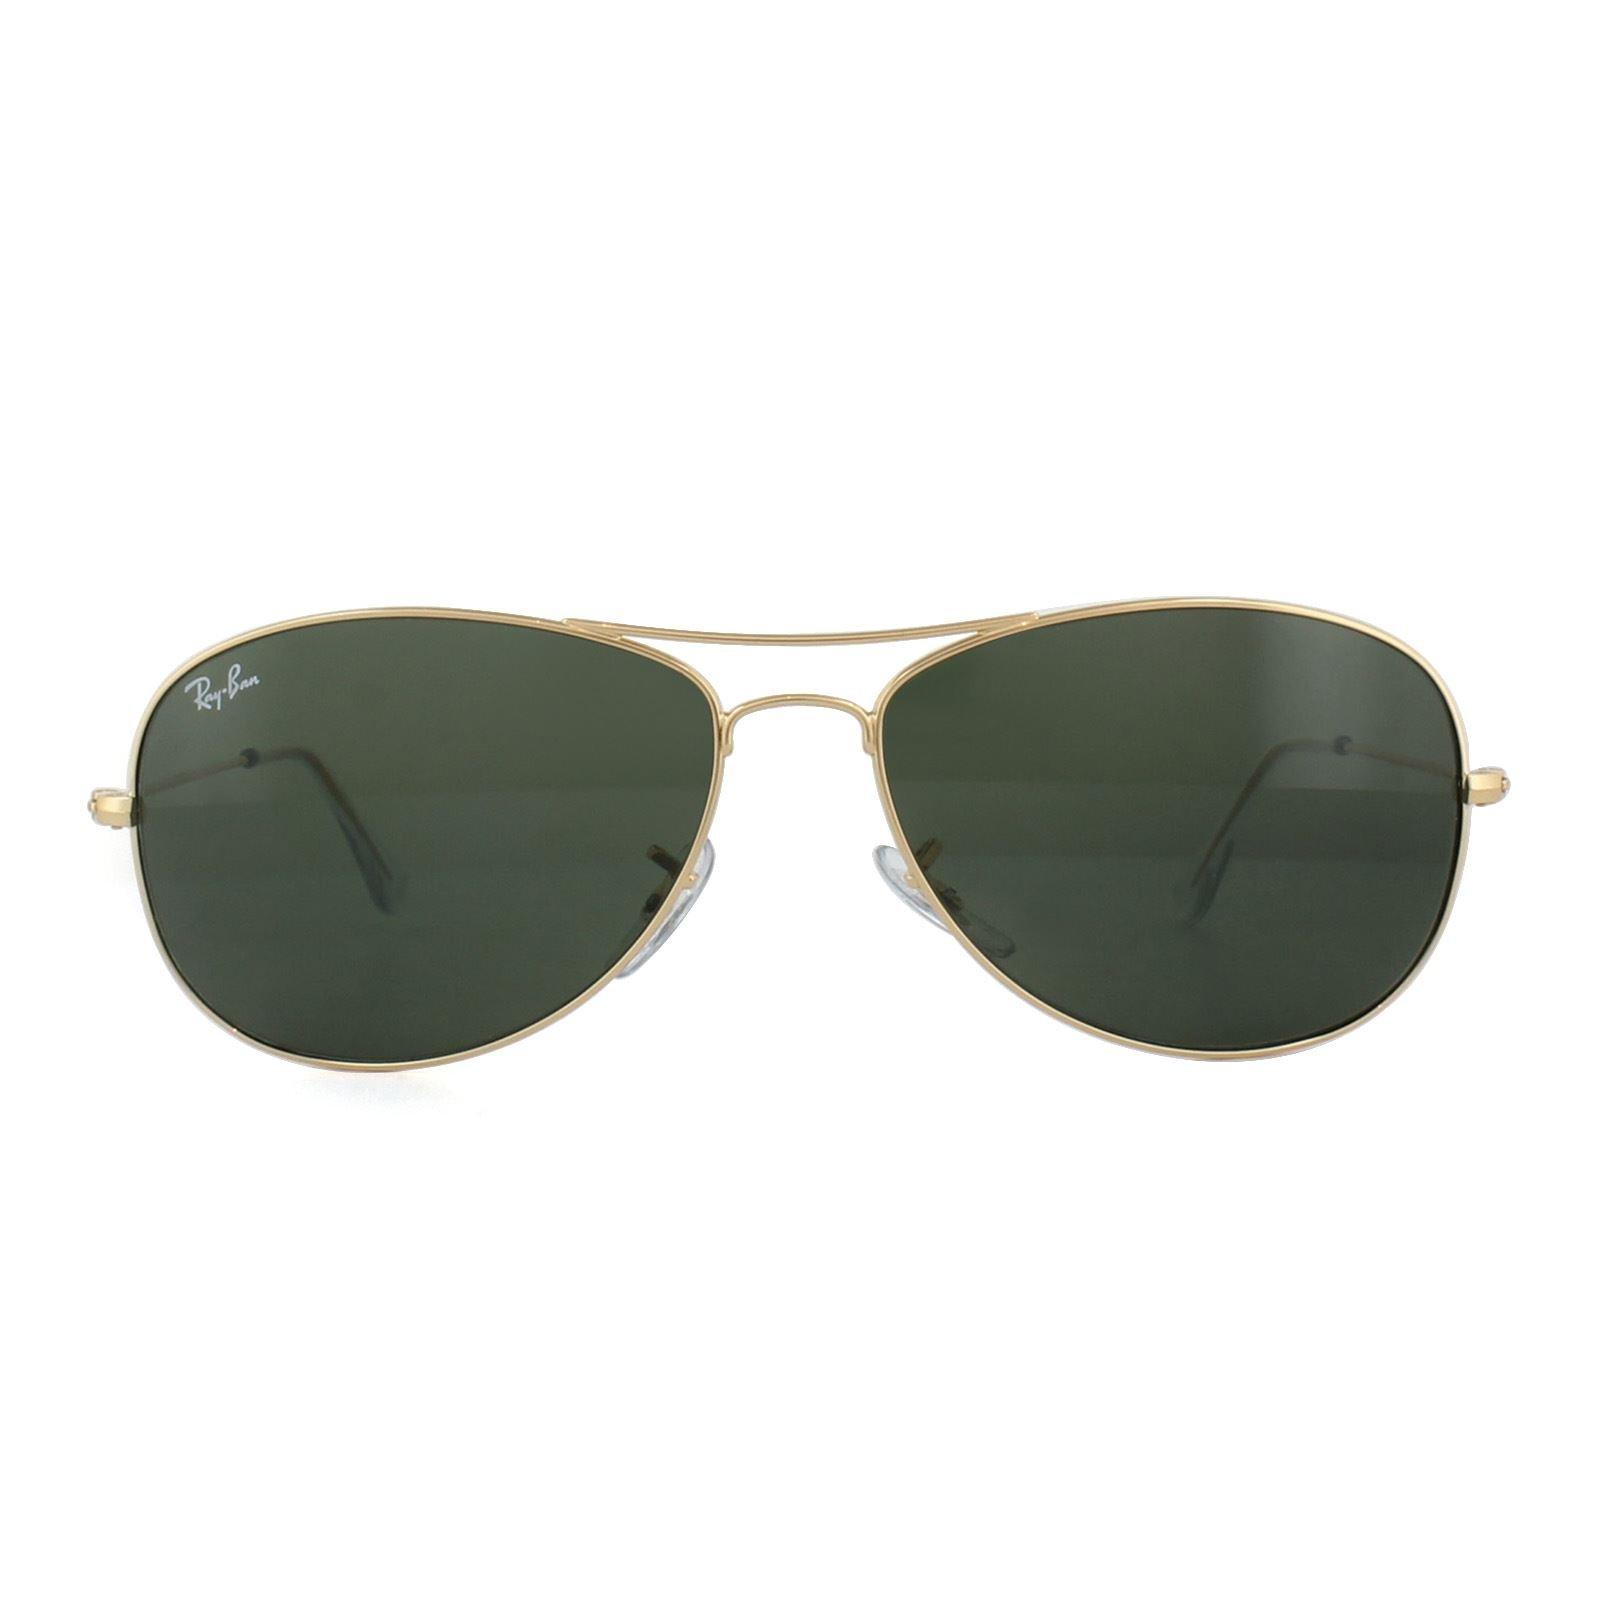 Sunglasses | Aviator Gold Green Sunglasses | Ray-Ban